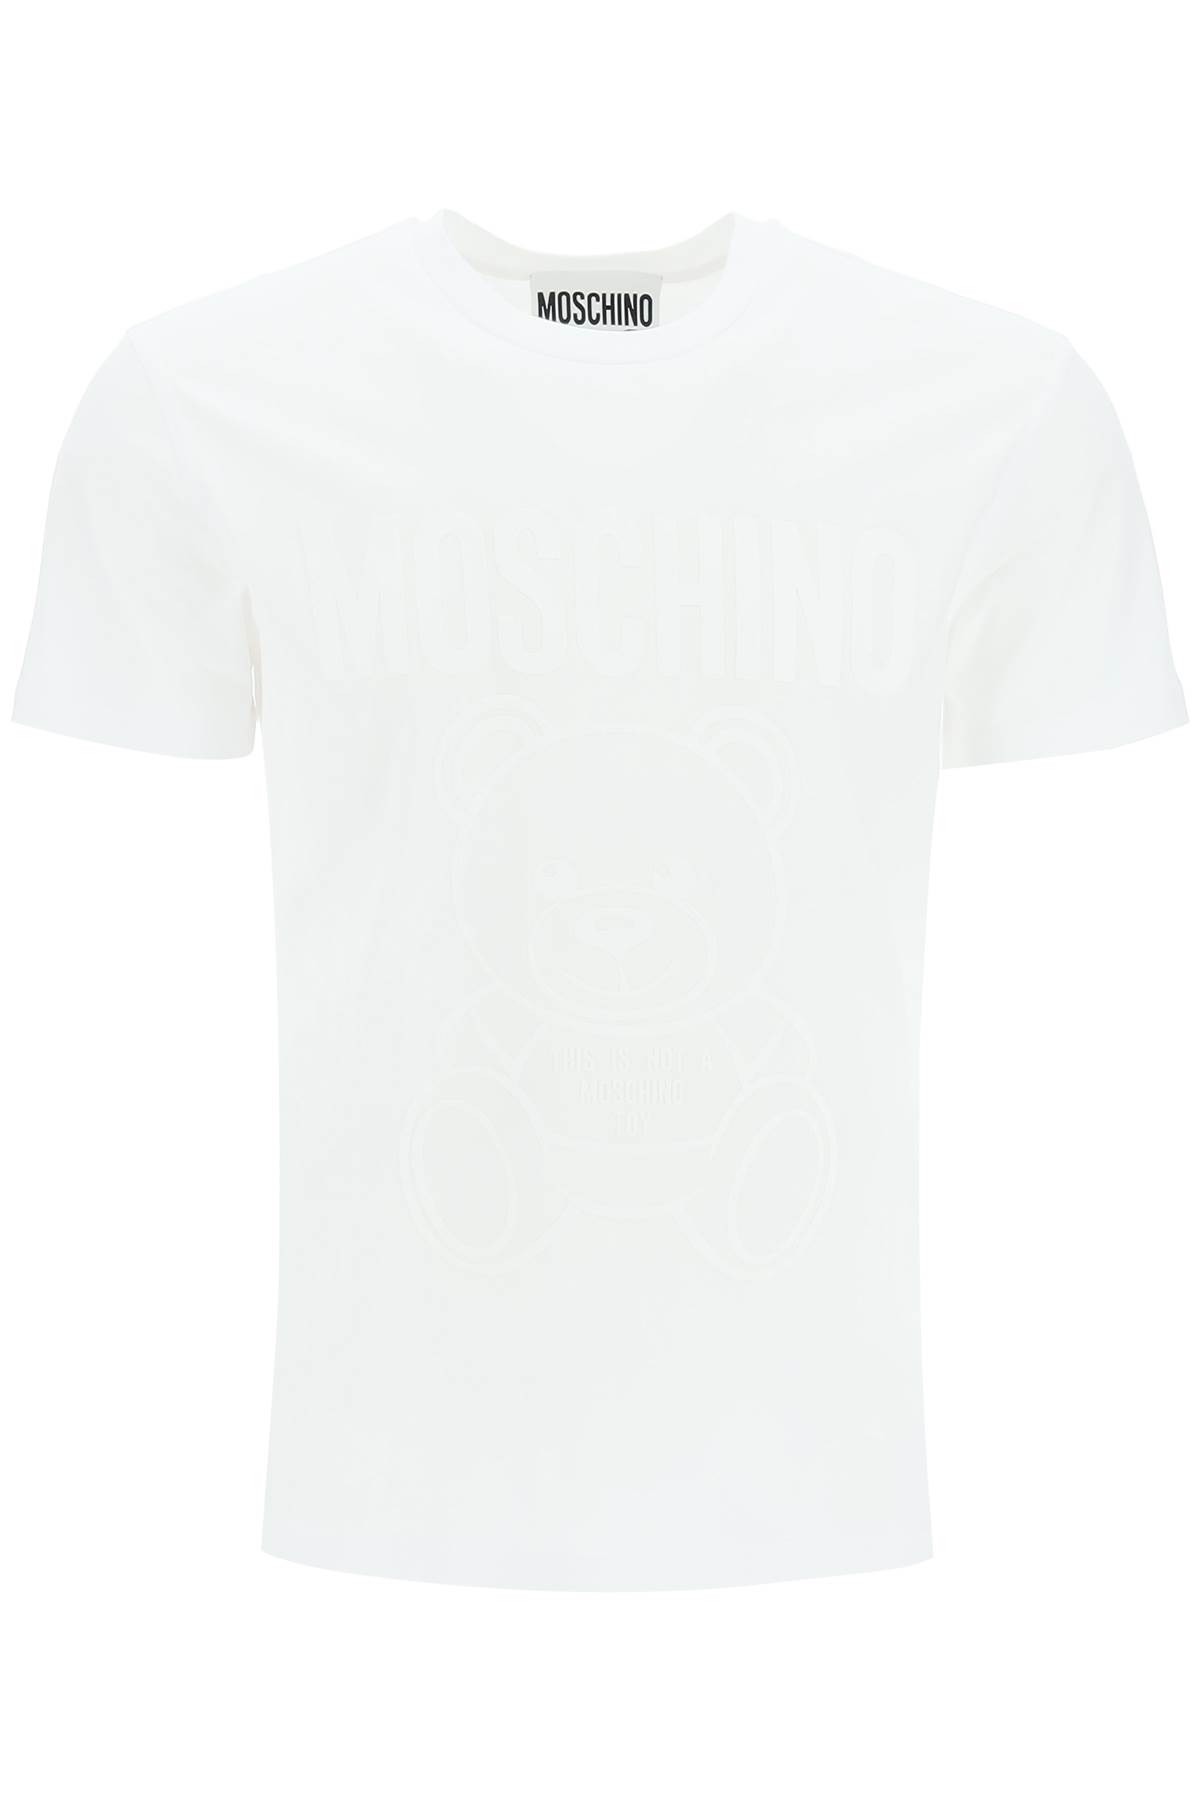 Moschino 白色男士t恤 V0730-2041-1001 In White